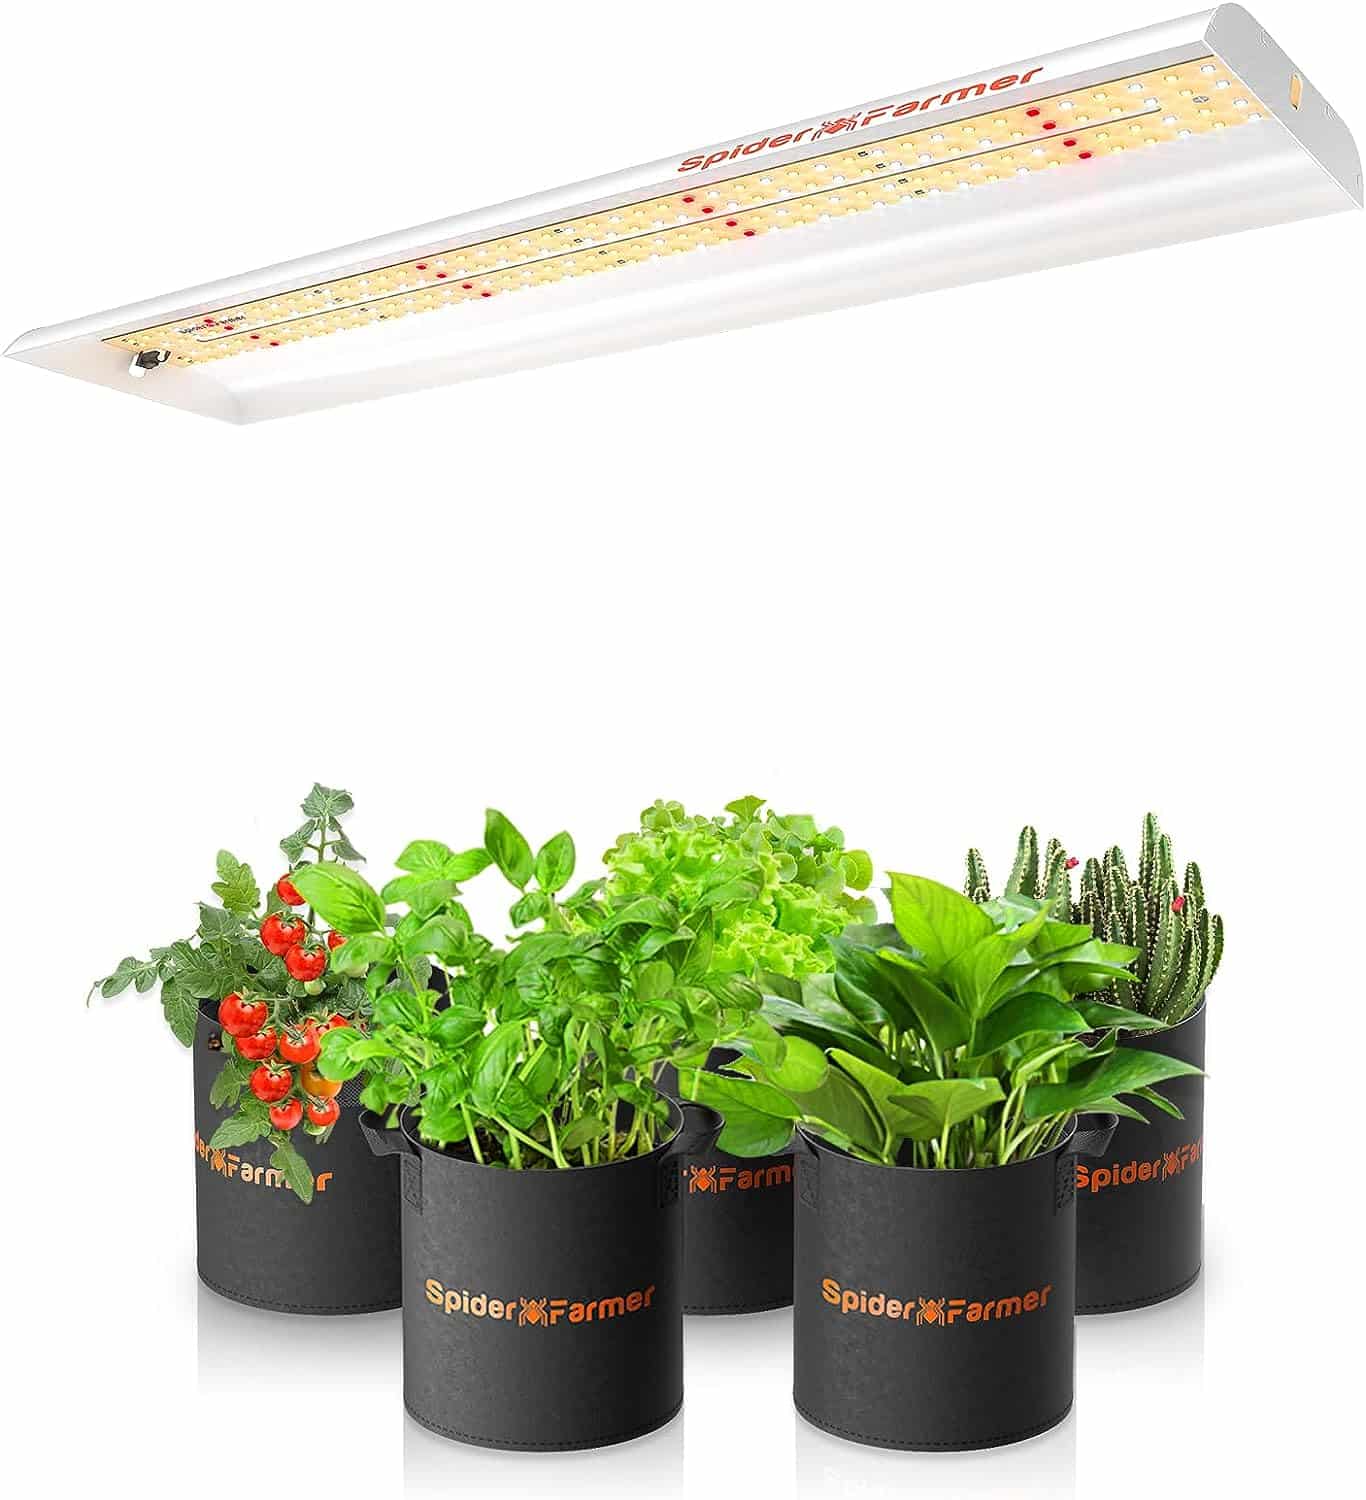 2023 Newest SPIDER FARMER SF300 LED Grow Light Sunlike Full Spectrum Plant Grow Lights for Indoor Plants Hydroponics Seeding Veg Flower Energy Saving  High Efficiency Growing Lamp 192 Diodes